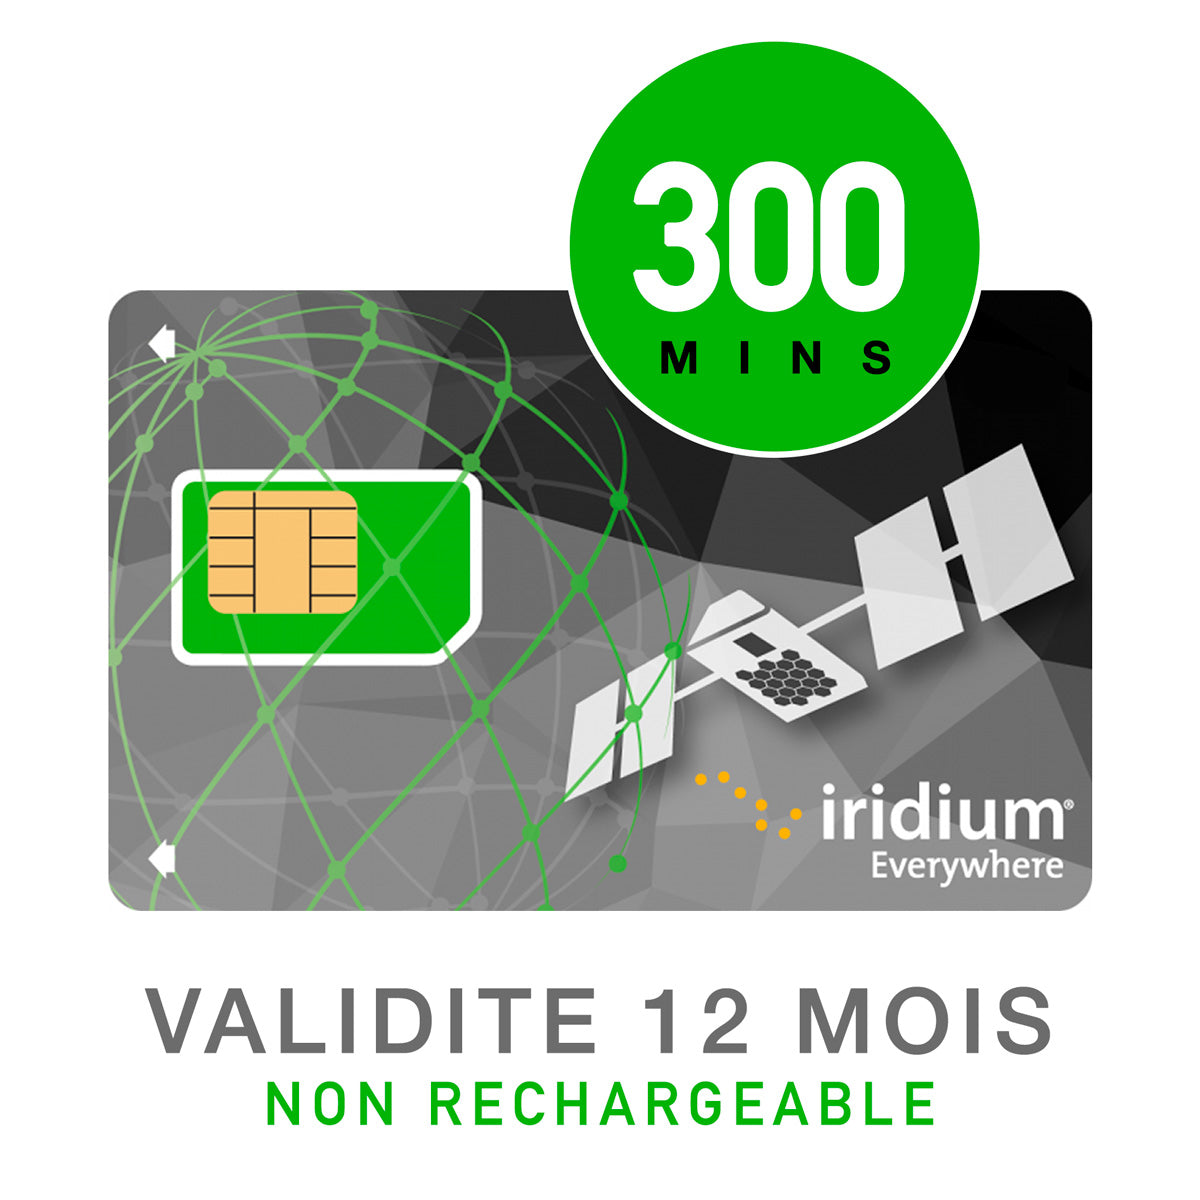 Prepaid Non Rechargeable Card - IRIDIUM - 300 min - 12 MONTHS